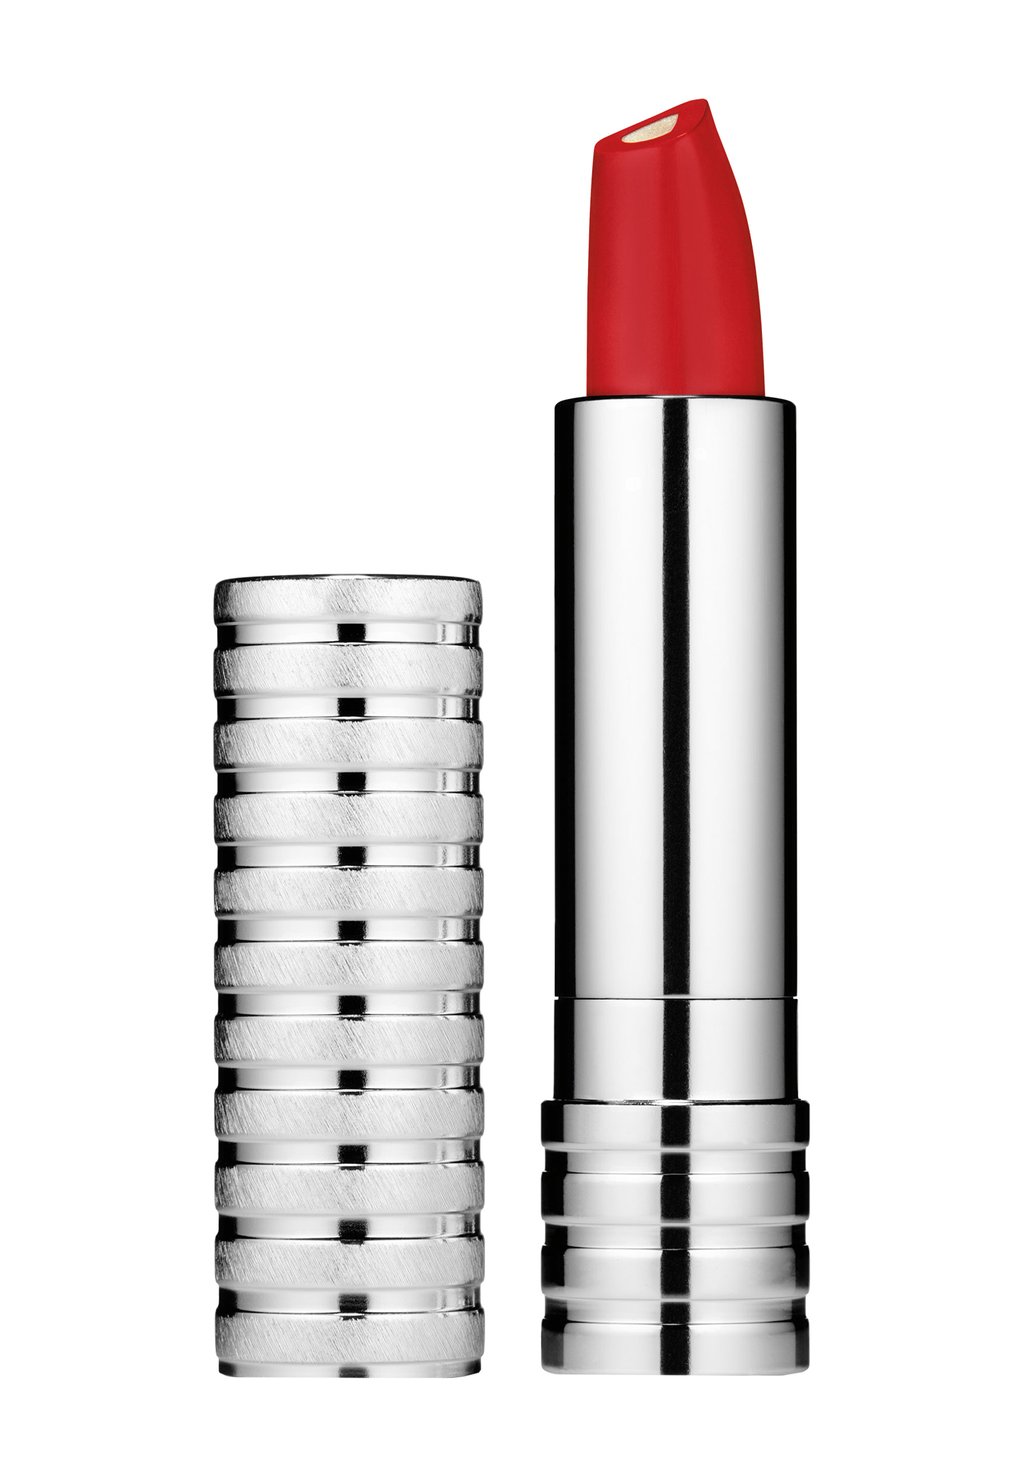 Губная помада Dramatically Different Lipstick Clinique, цвет red alert